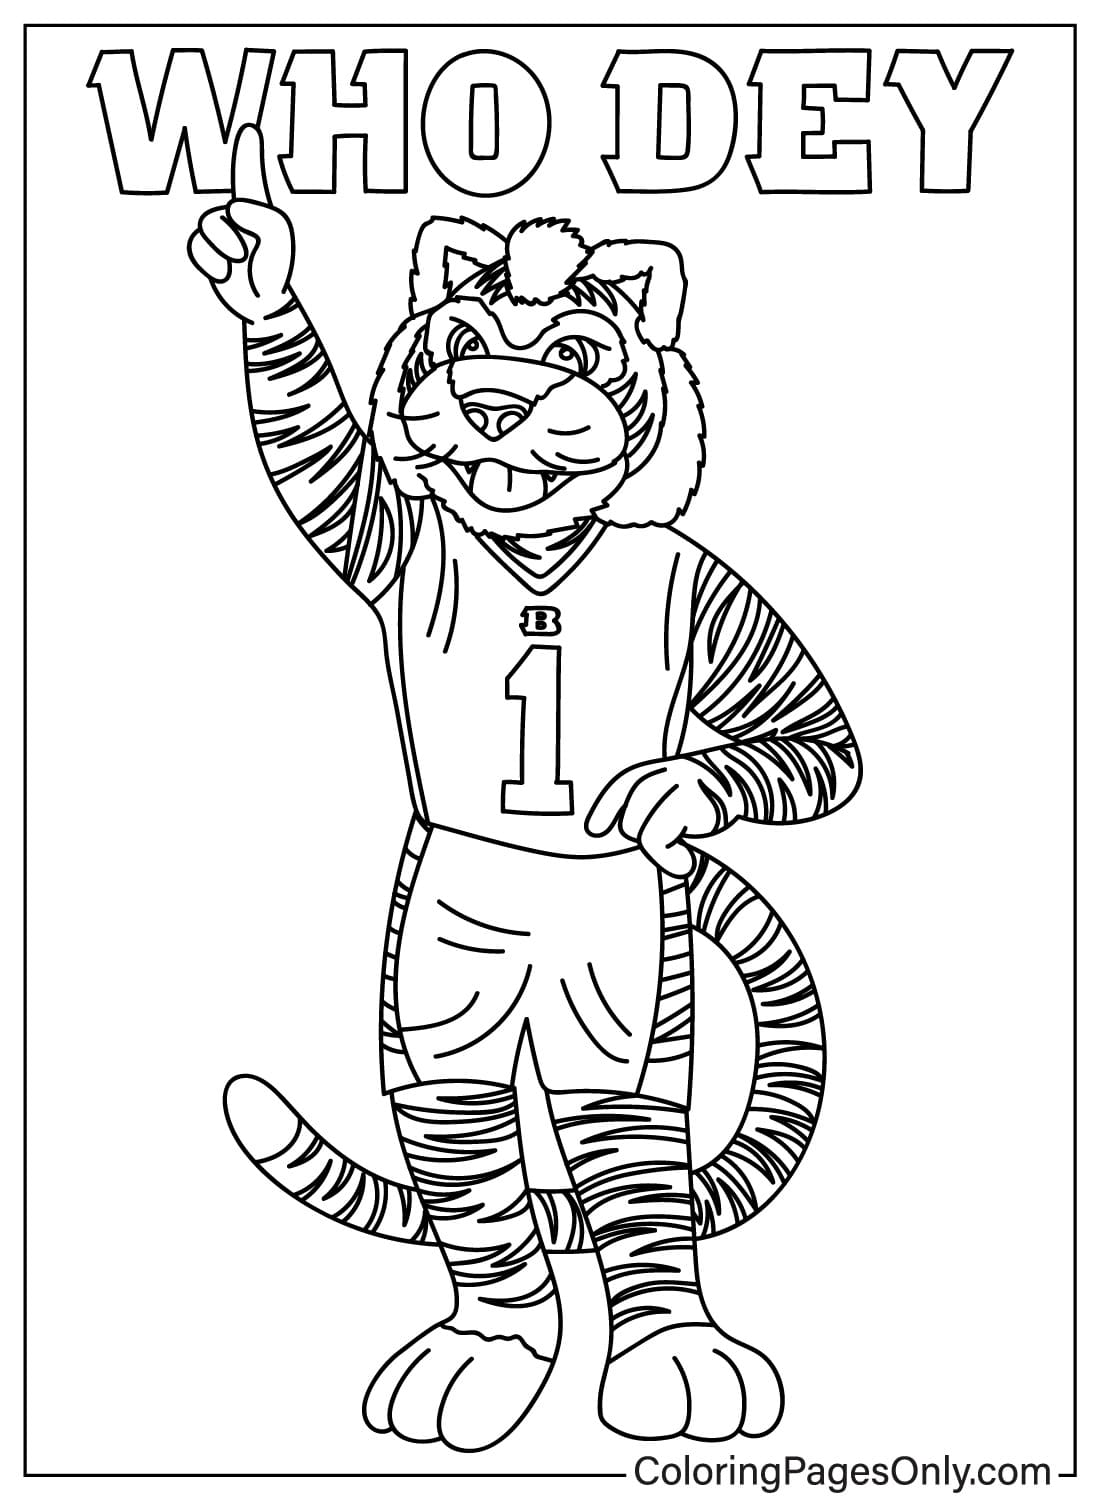 Mascot Cincinnati Bengals Coloring Page from Cincinnati Bengals